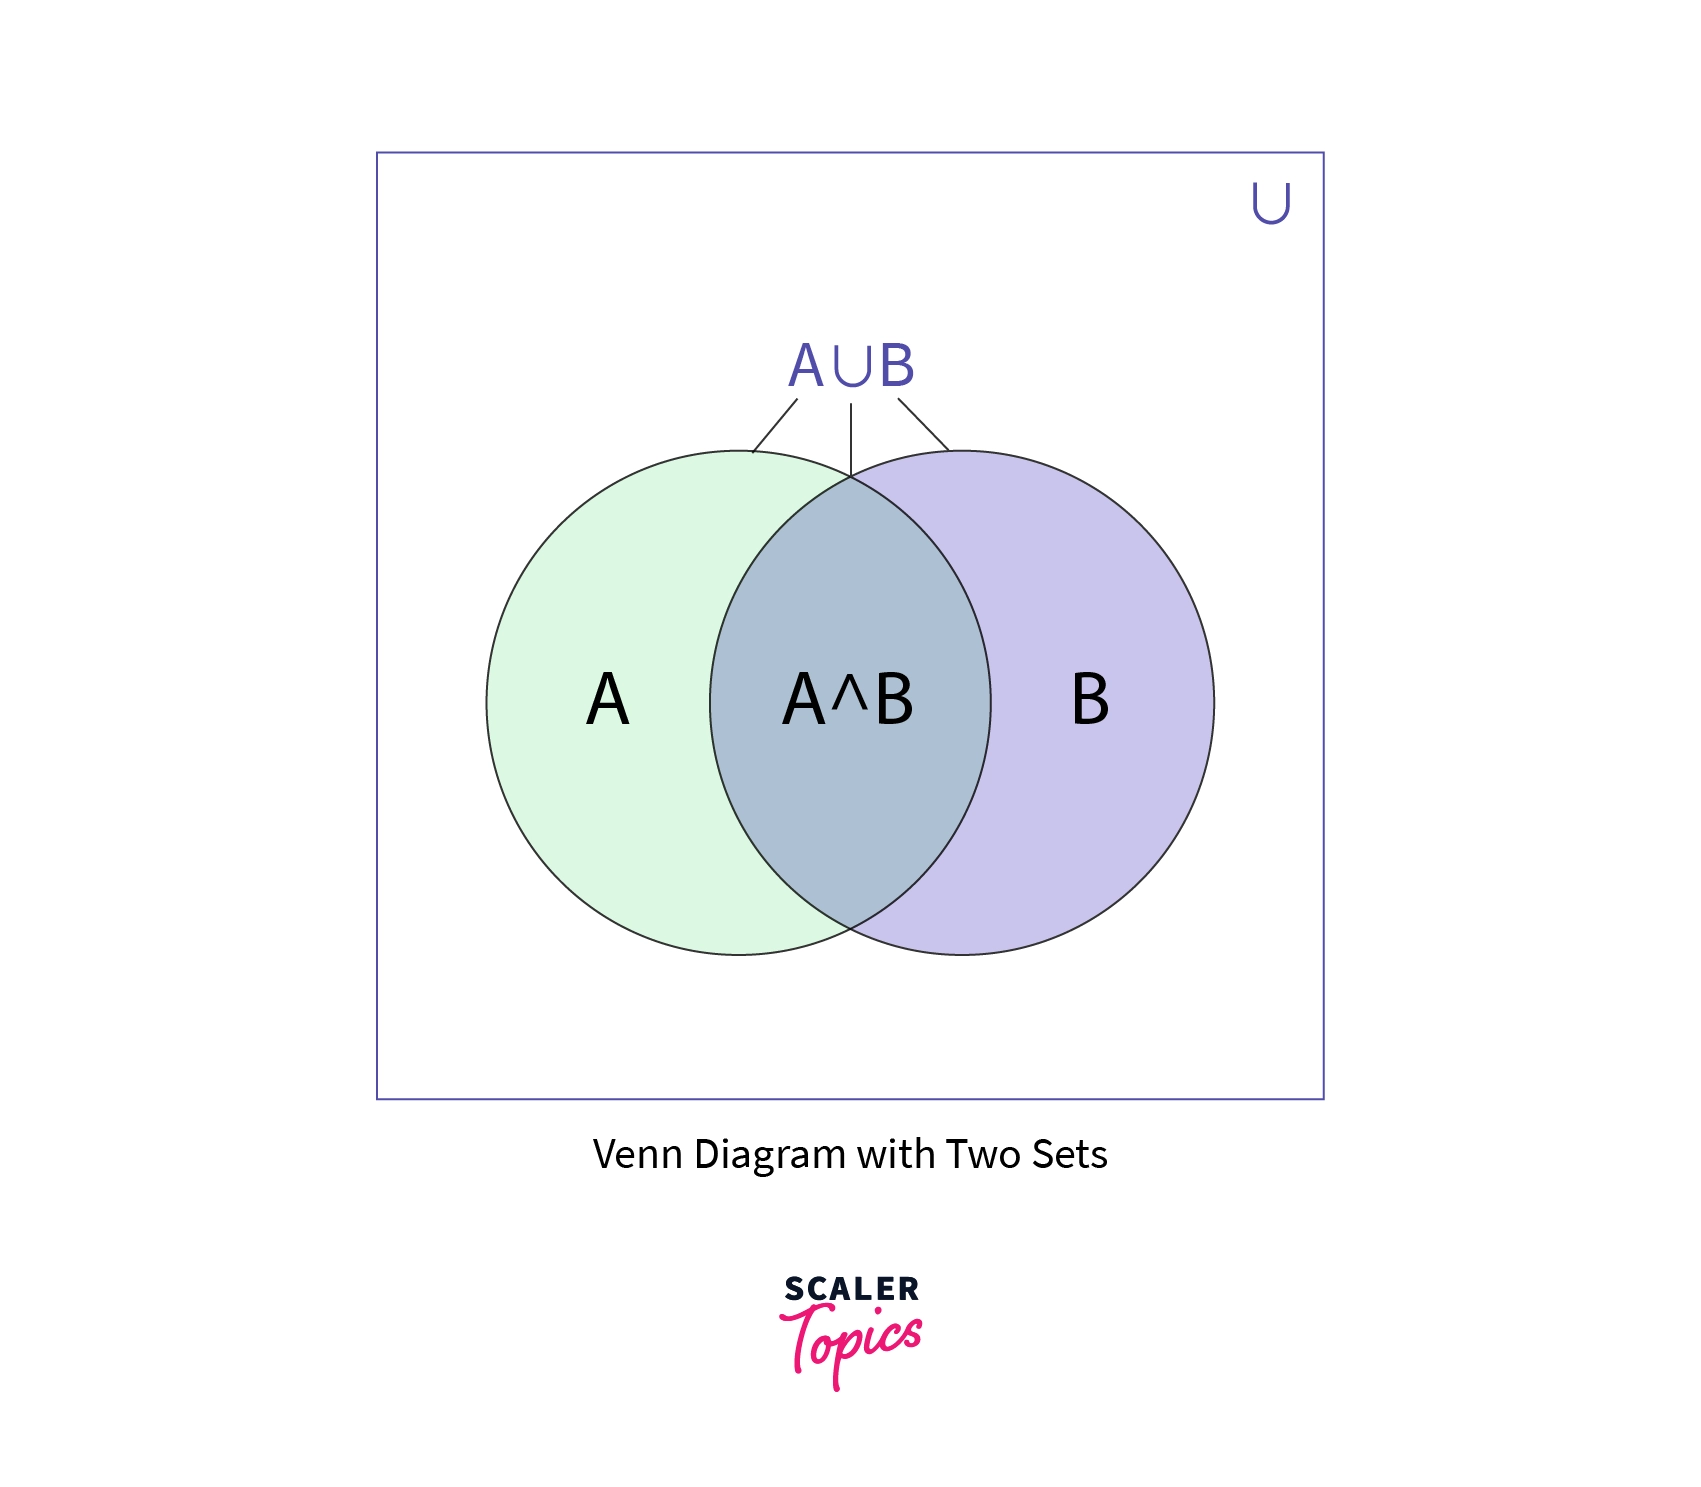 enn Diagram with Two Sets